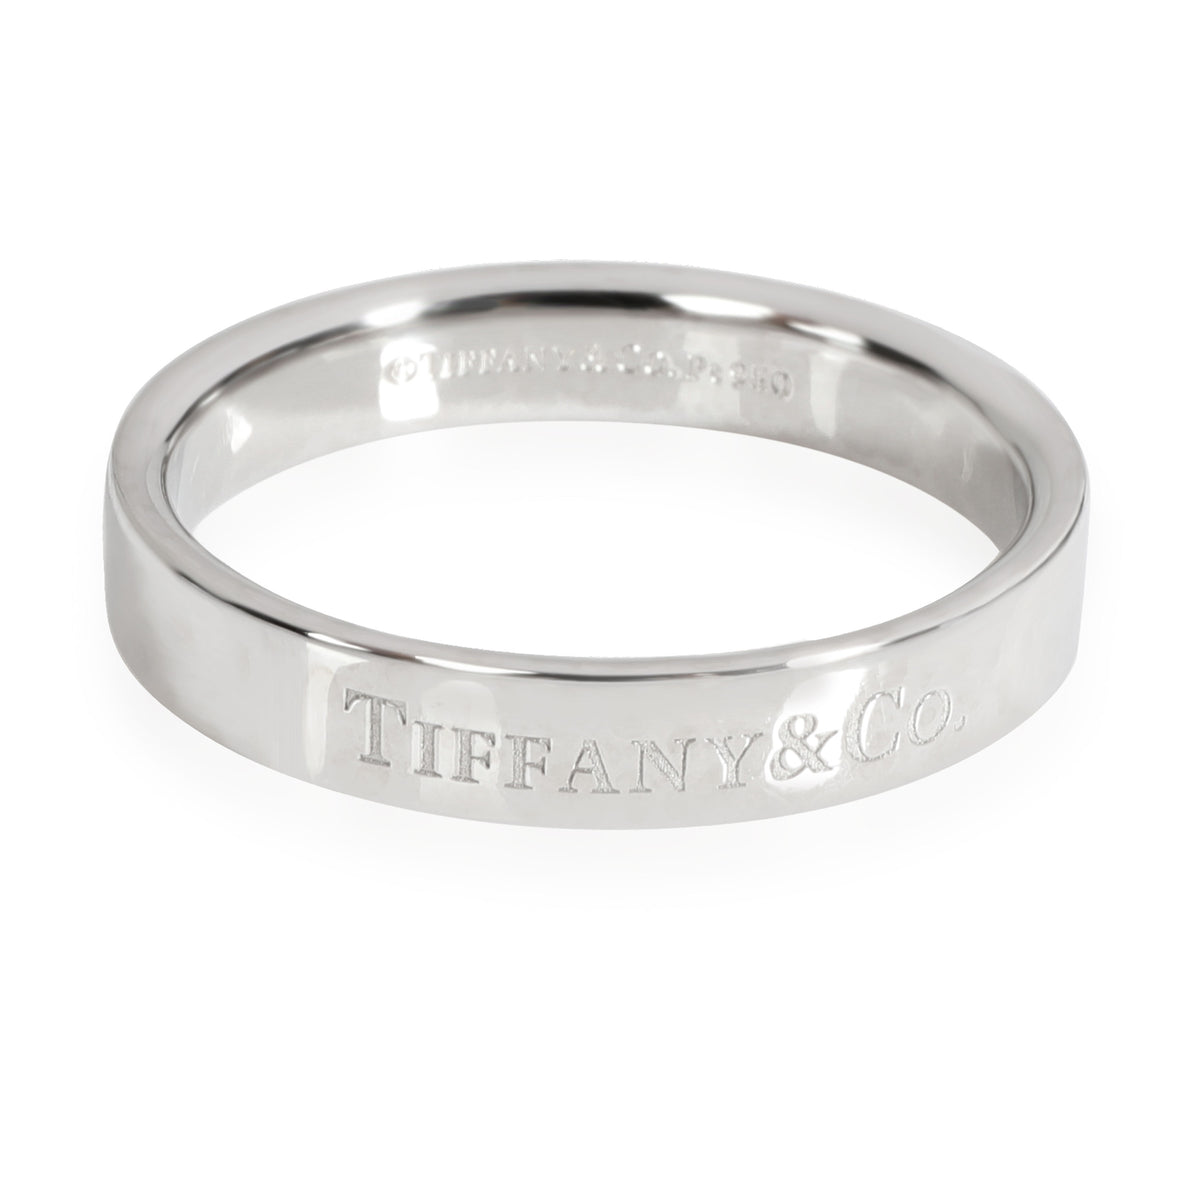 Tiffany & Co. Wedding Band in Platinum